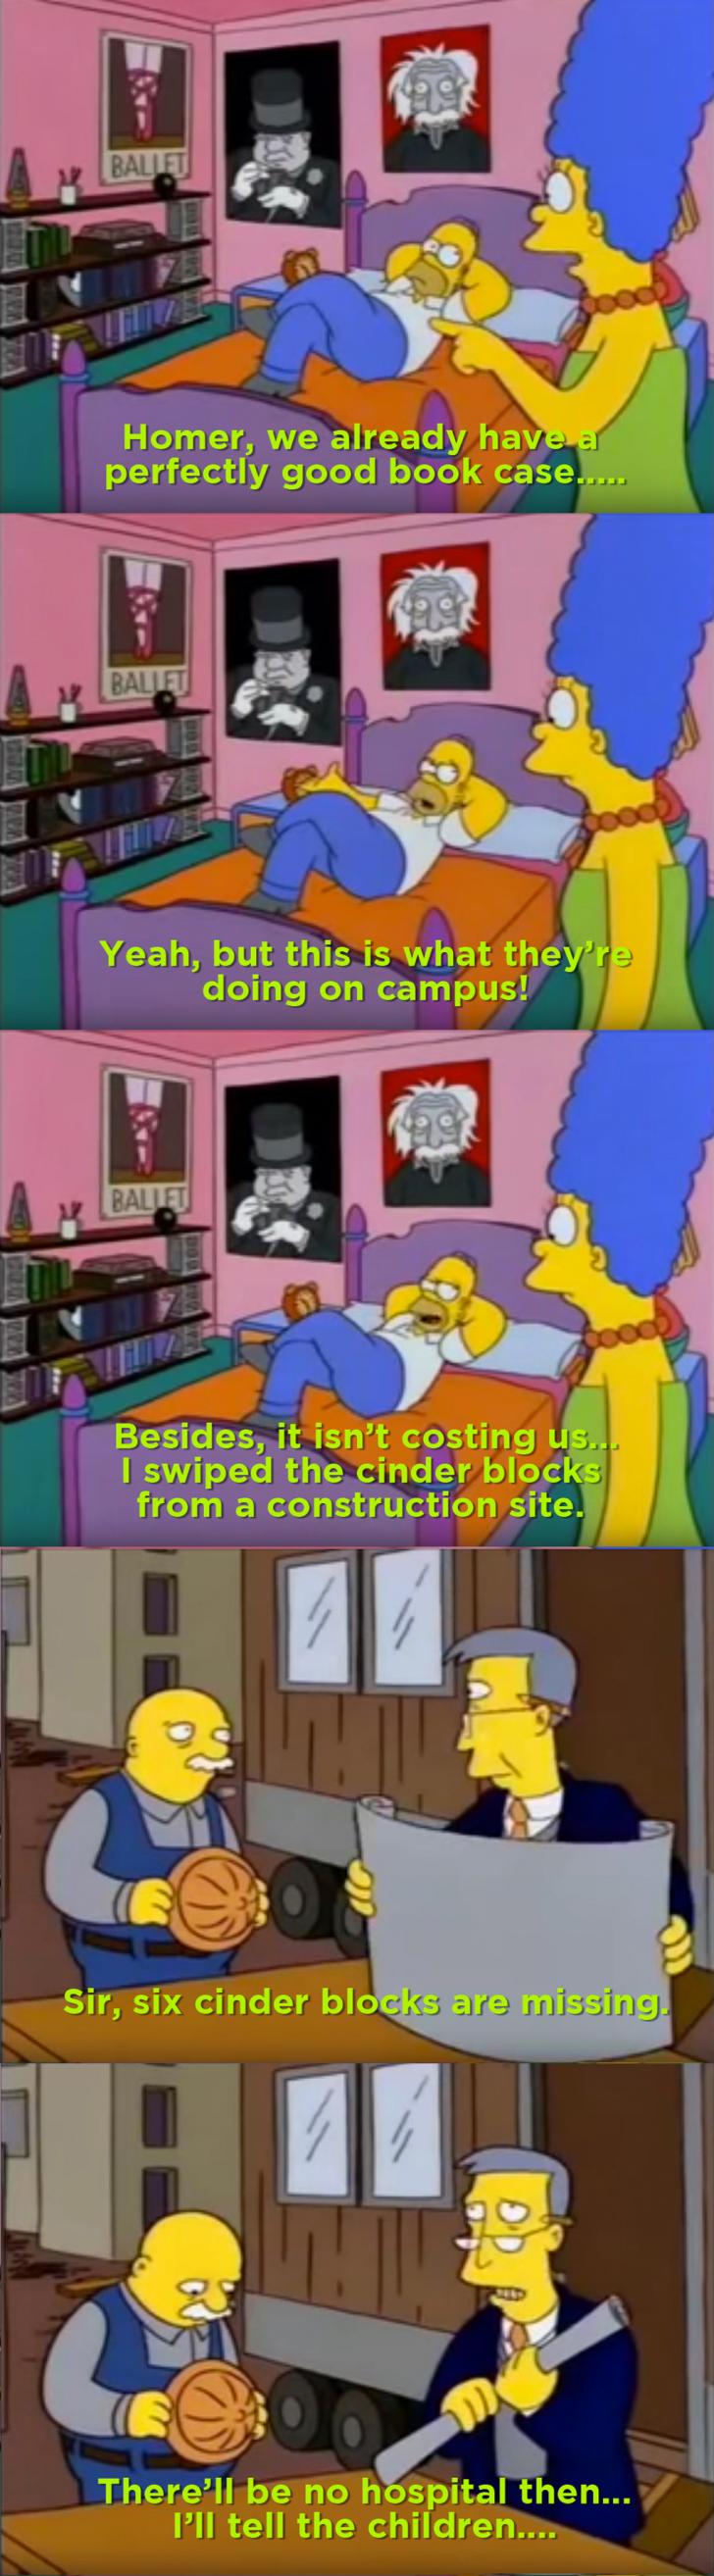 Homer's dorm room inspired furniture